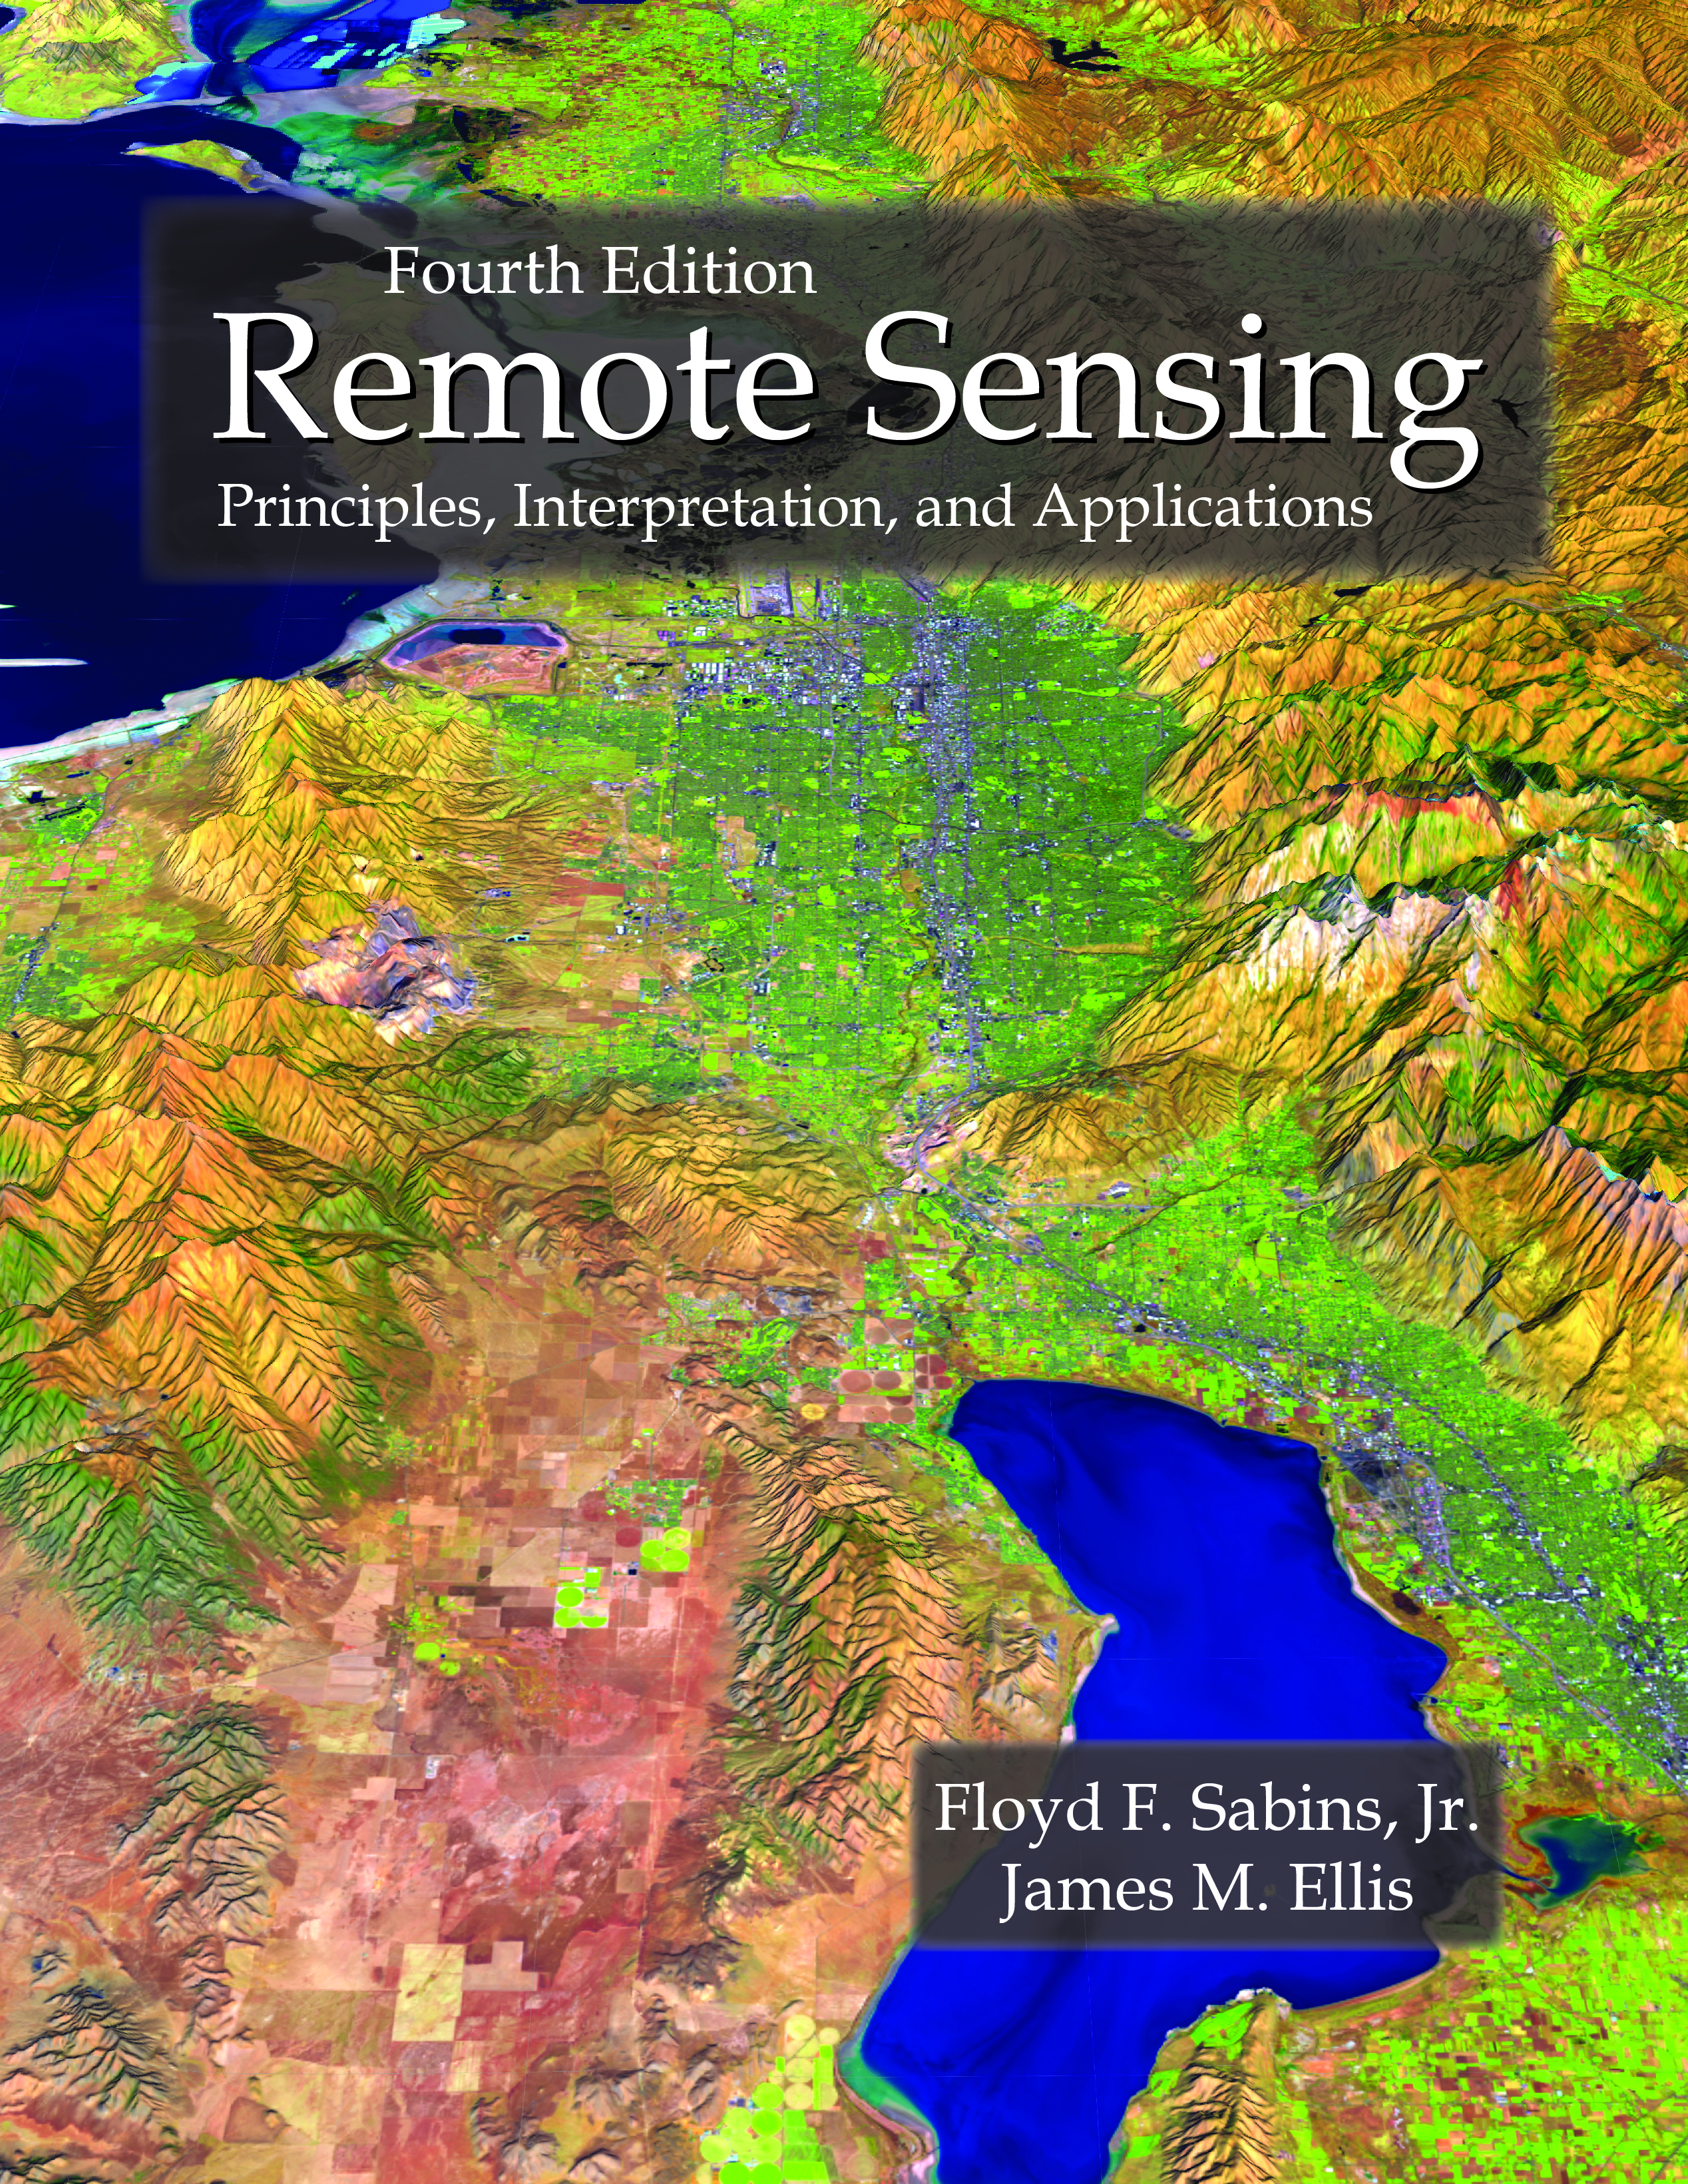 Remote Sensing: Principles, Interpretation, and Applications, Fourth Edition by Floyd F. Sabins, Jr., James M. Ellis